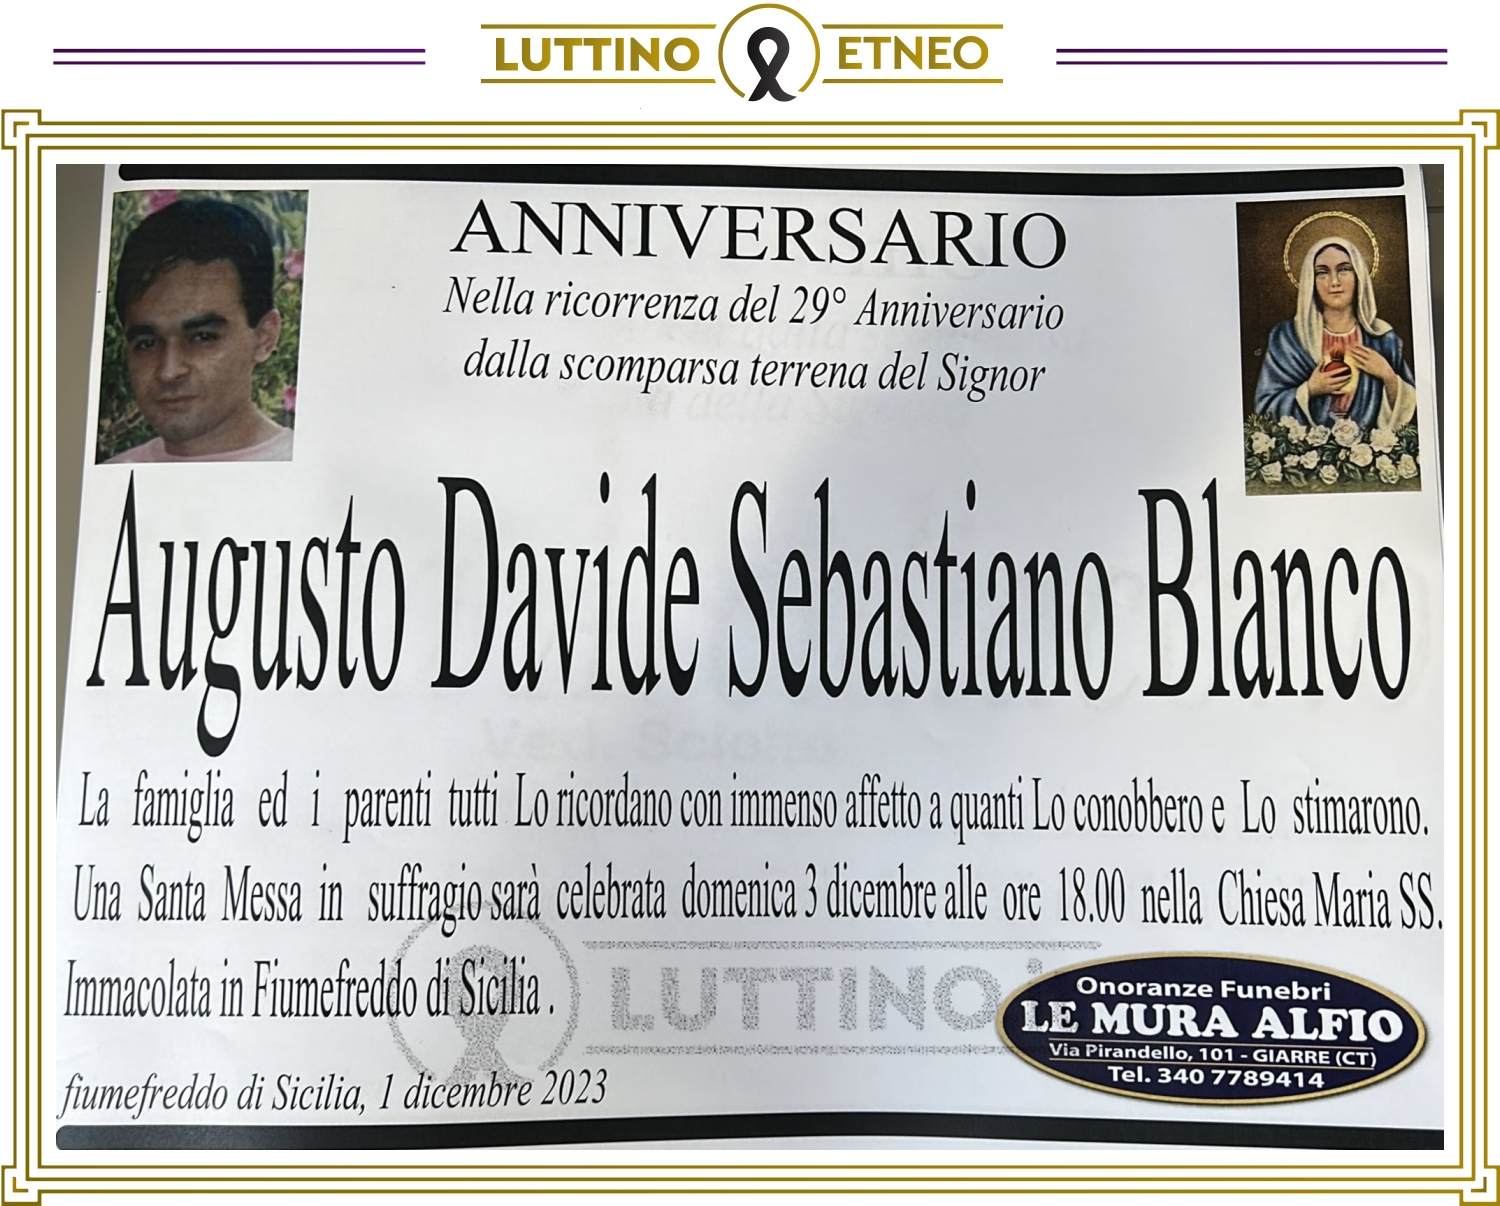 Augusto Davide Sebastiano Blanco